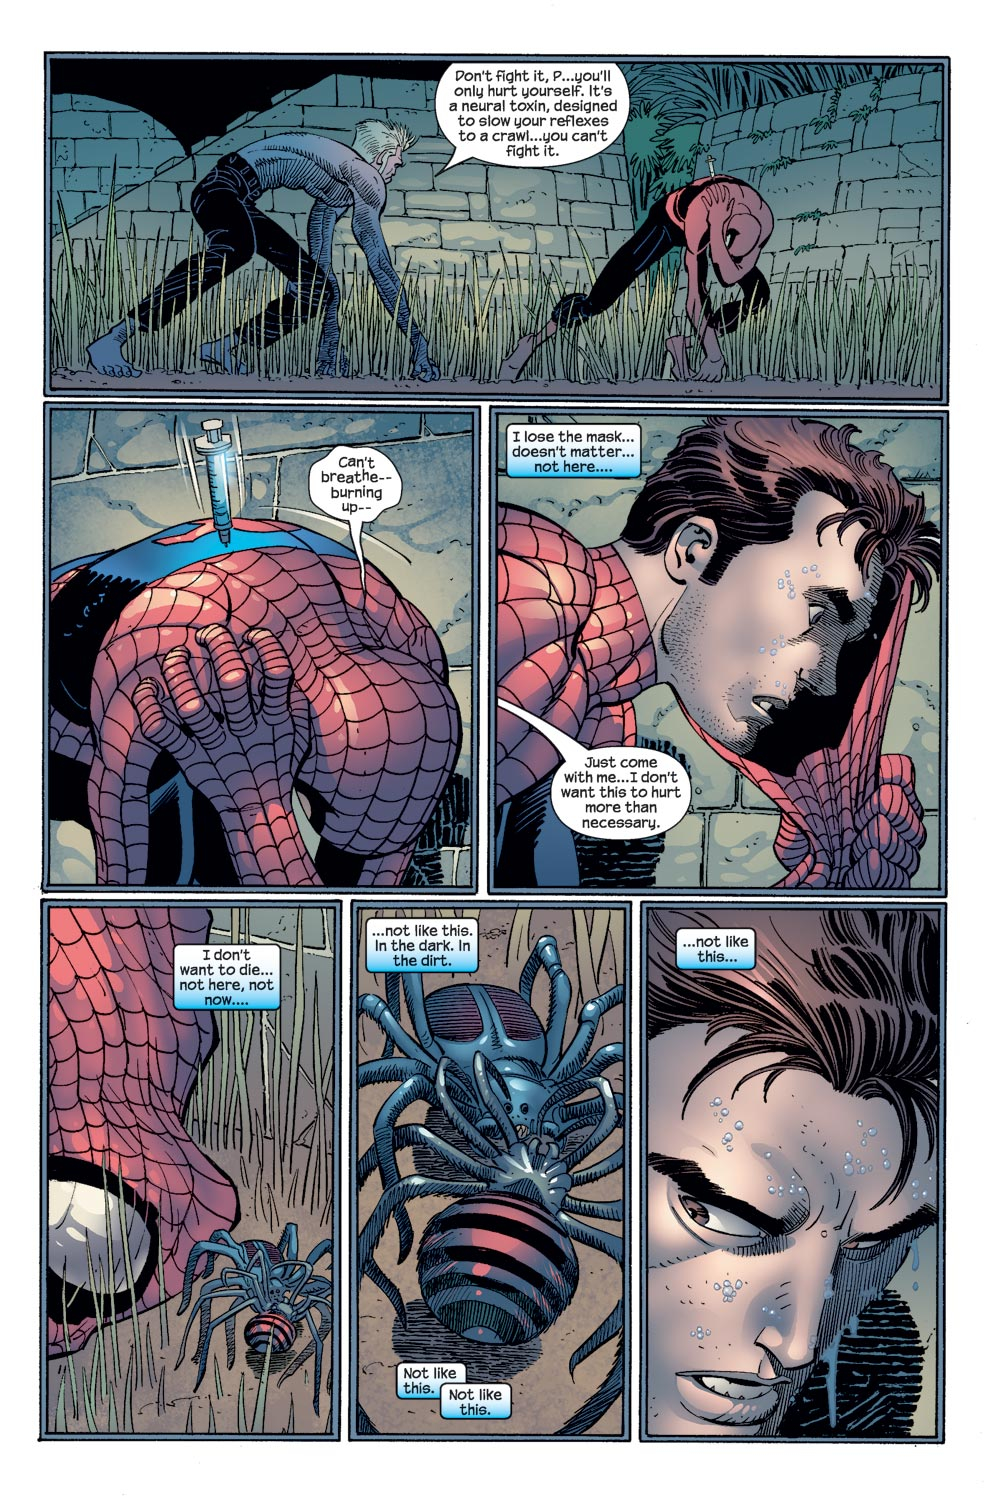 Spider-Man VS Ezekiel 